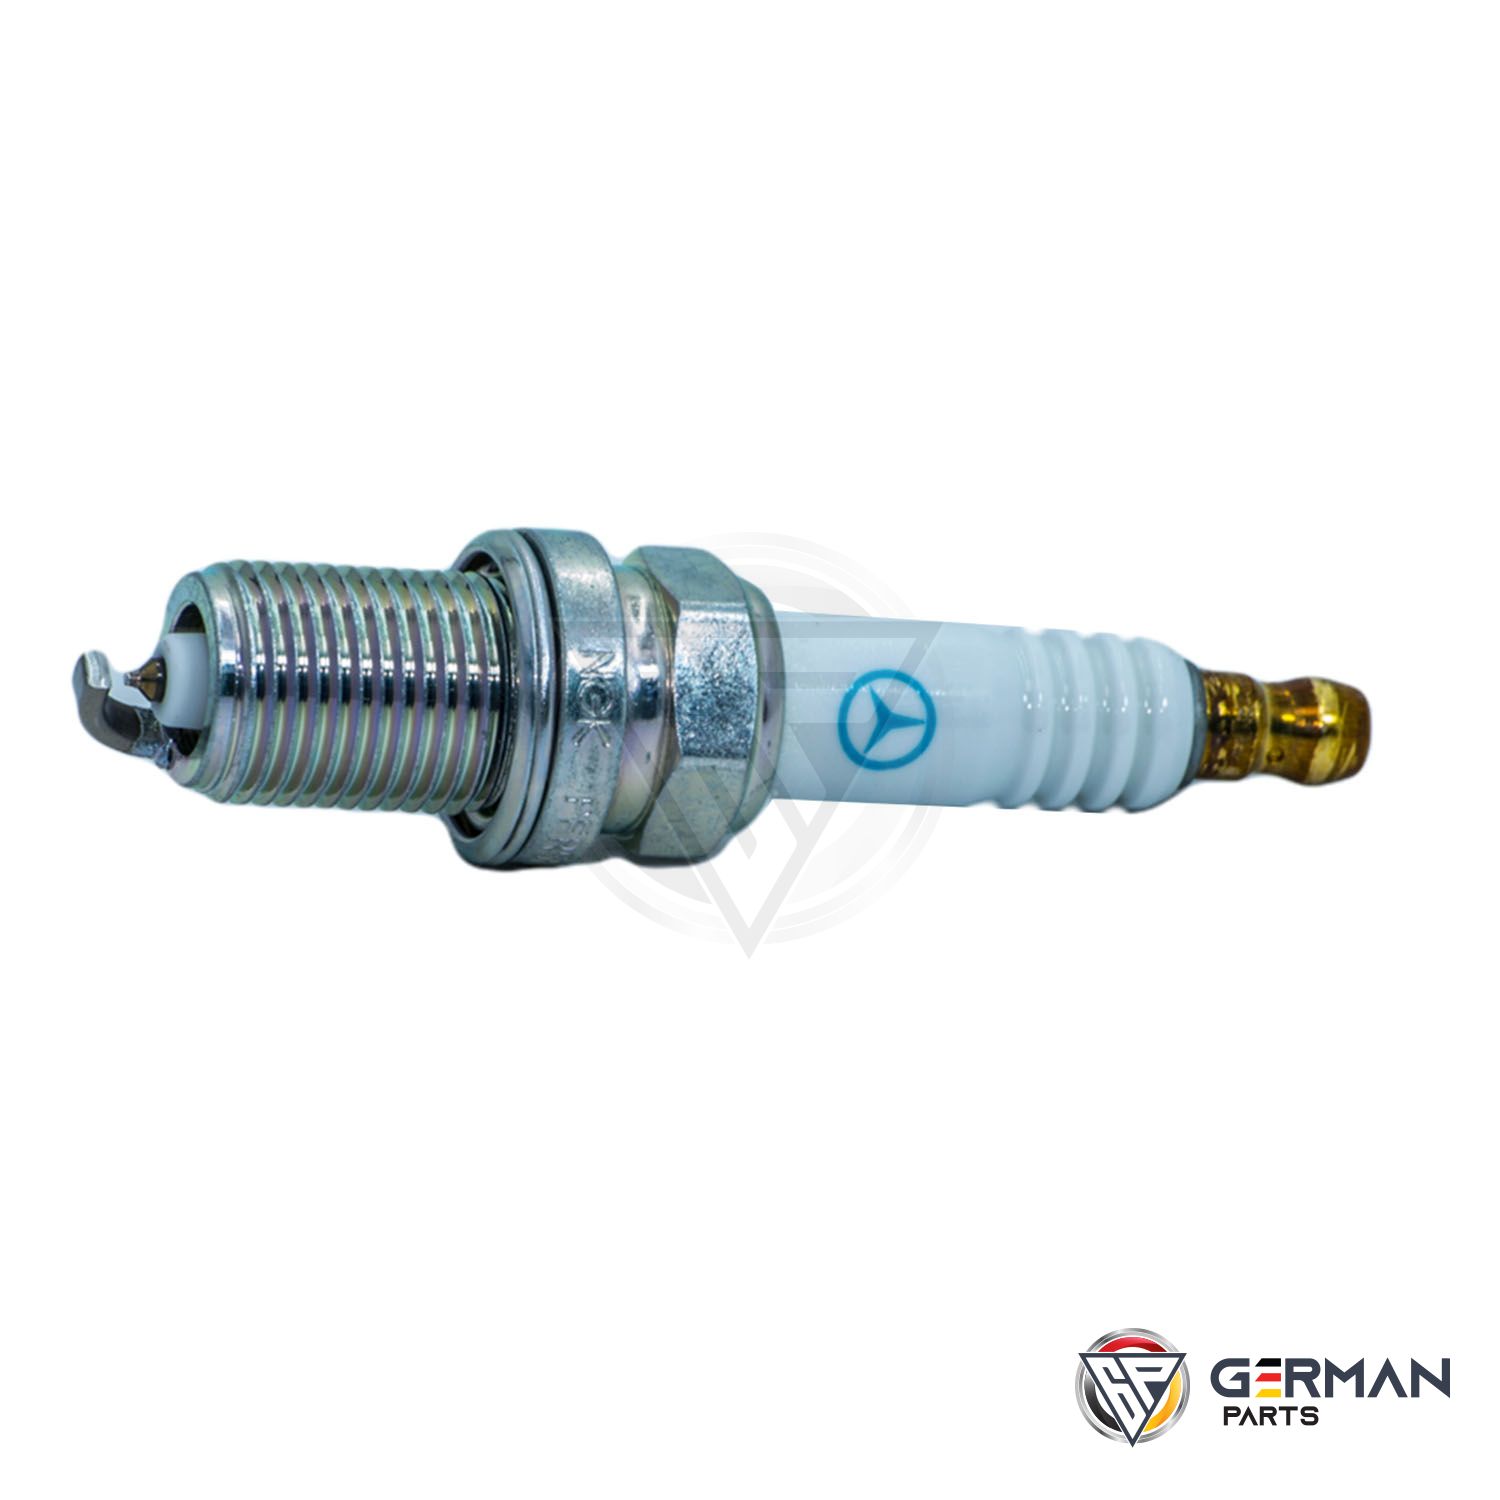 Buy Mercedes Benz Spark Plug 0031599403 - German Parts